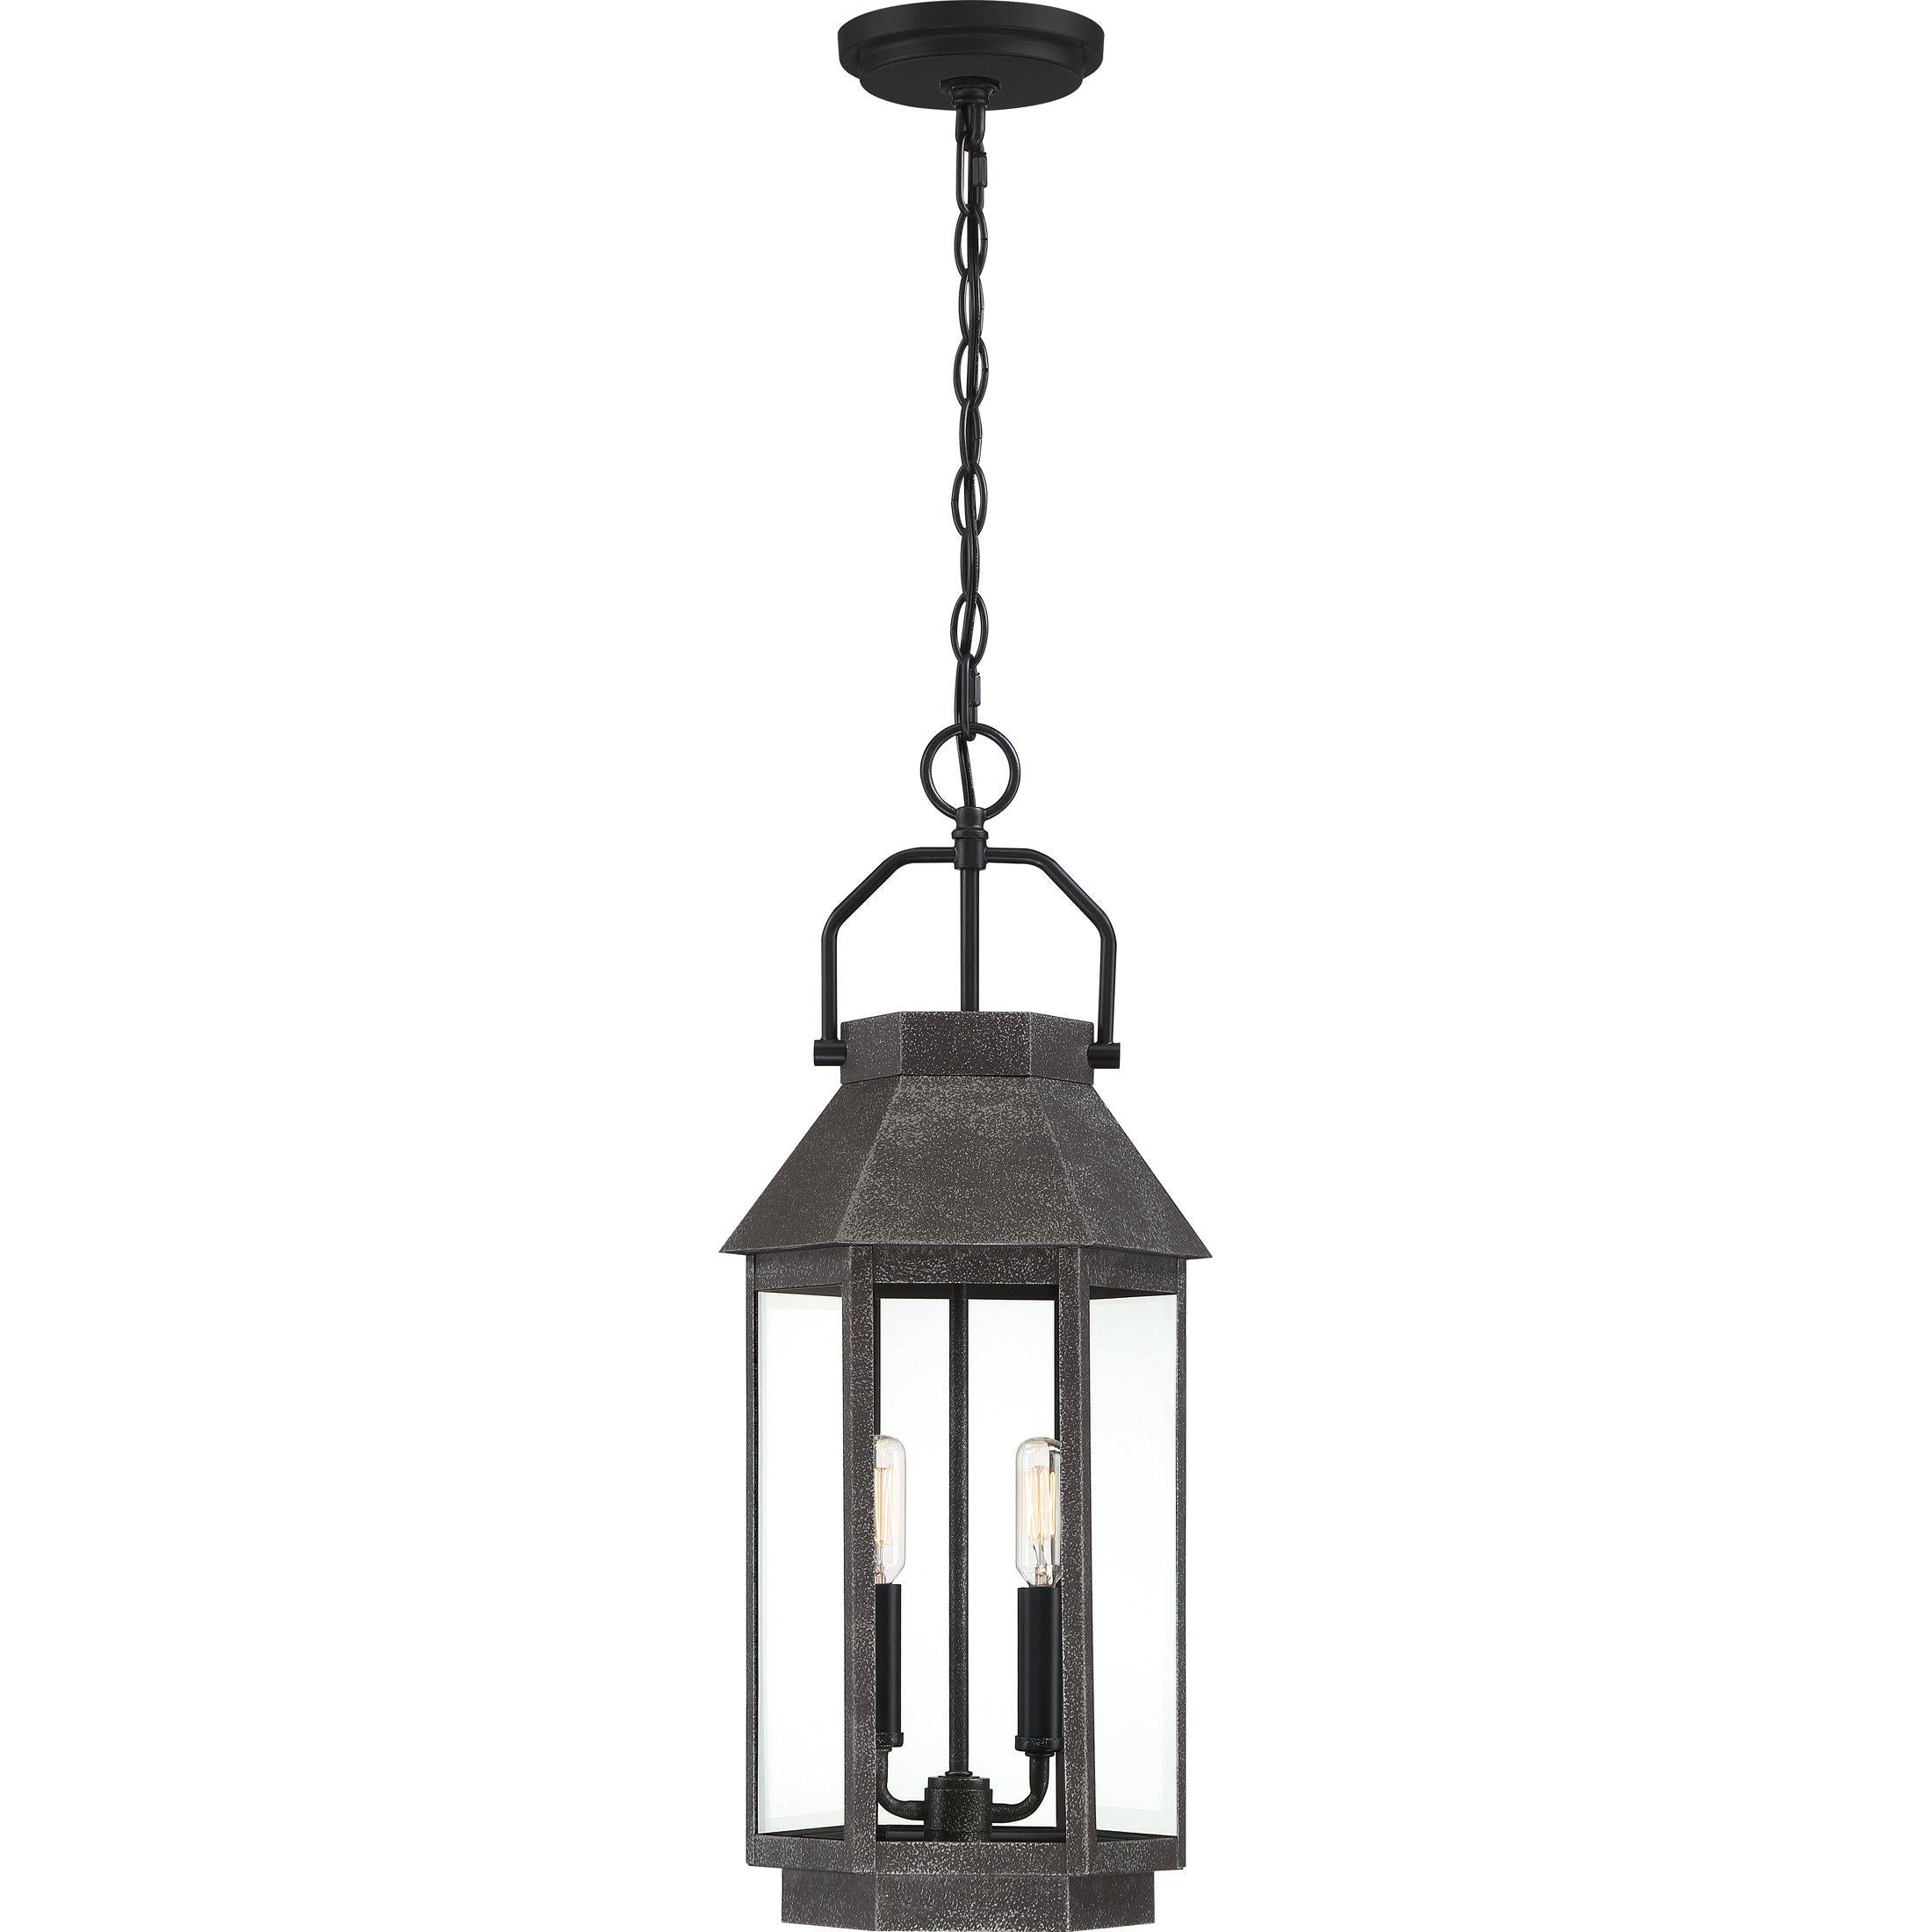 Quoizel  Campbell Outdoor Lantern,Hanging Outdoor Light Fixture l Hanging Quoizel Speckled Black  